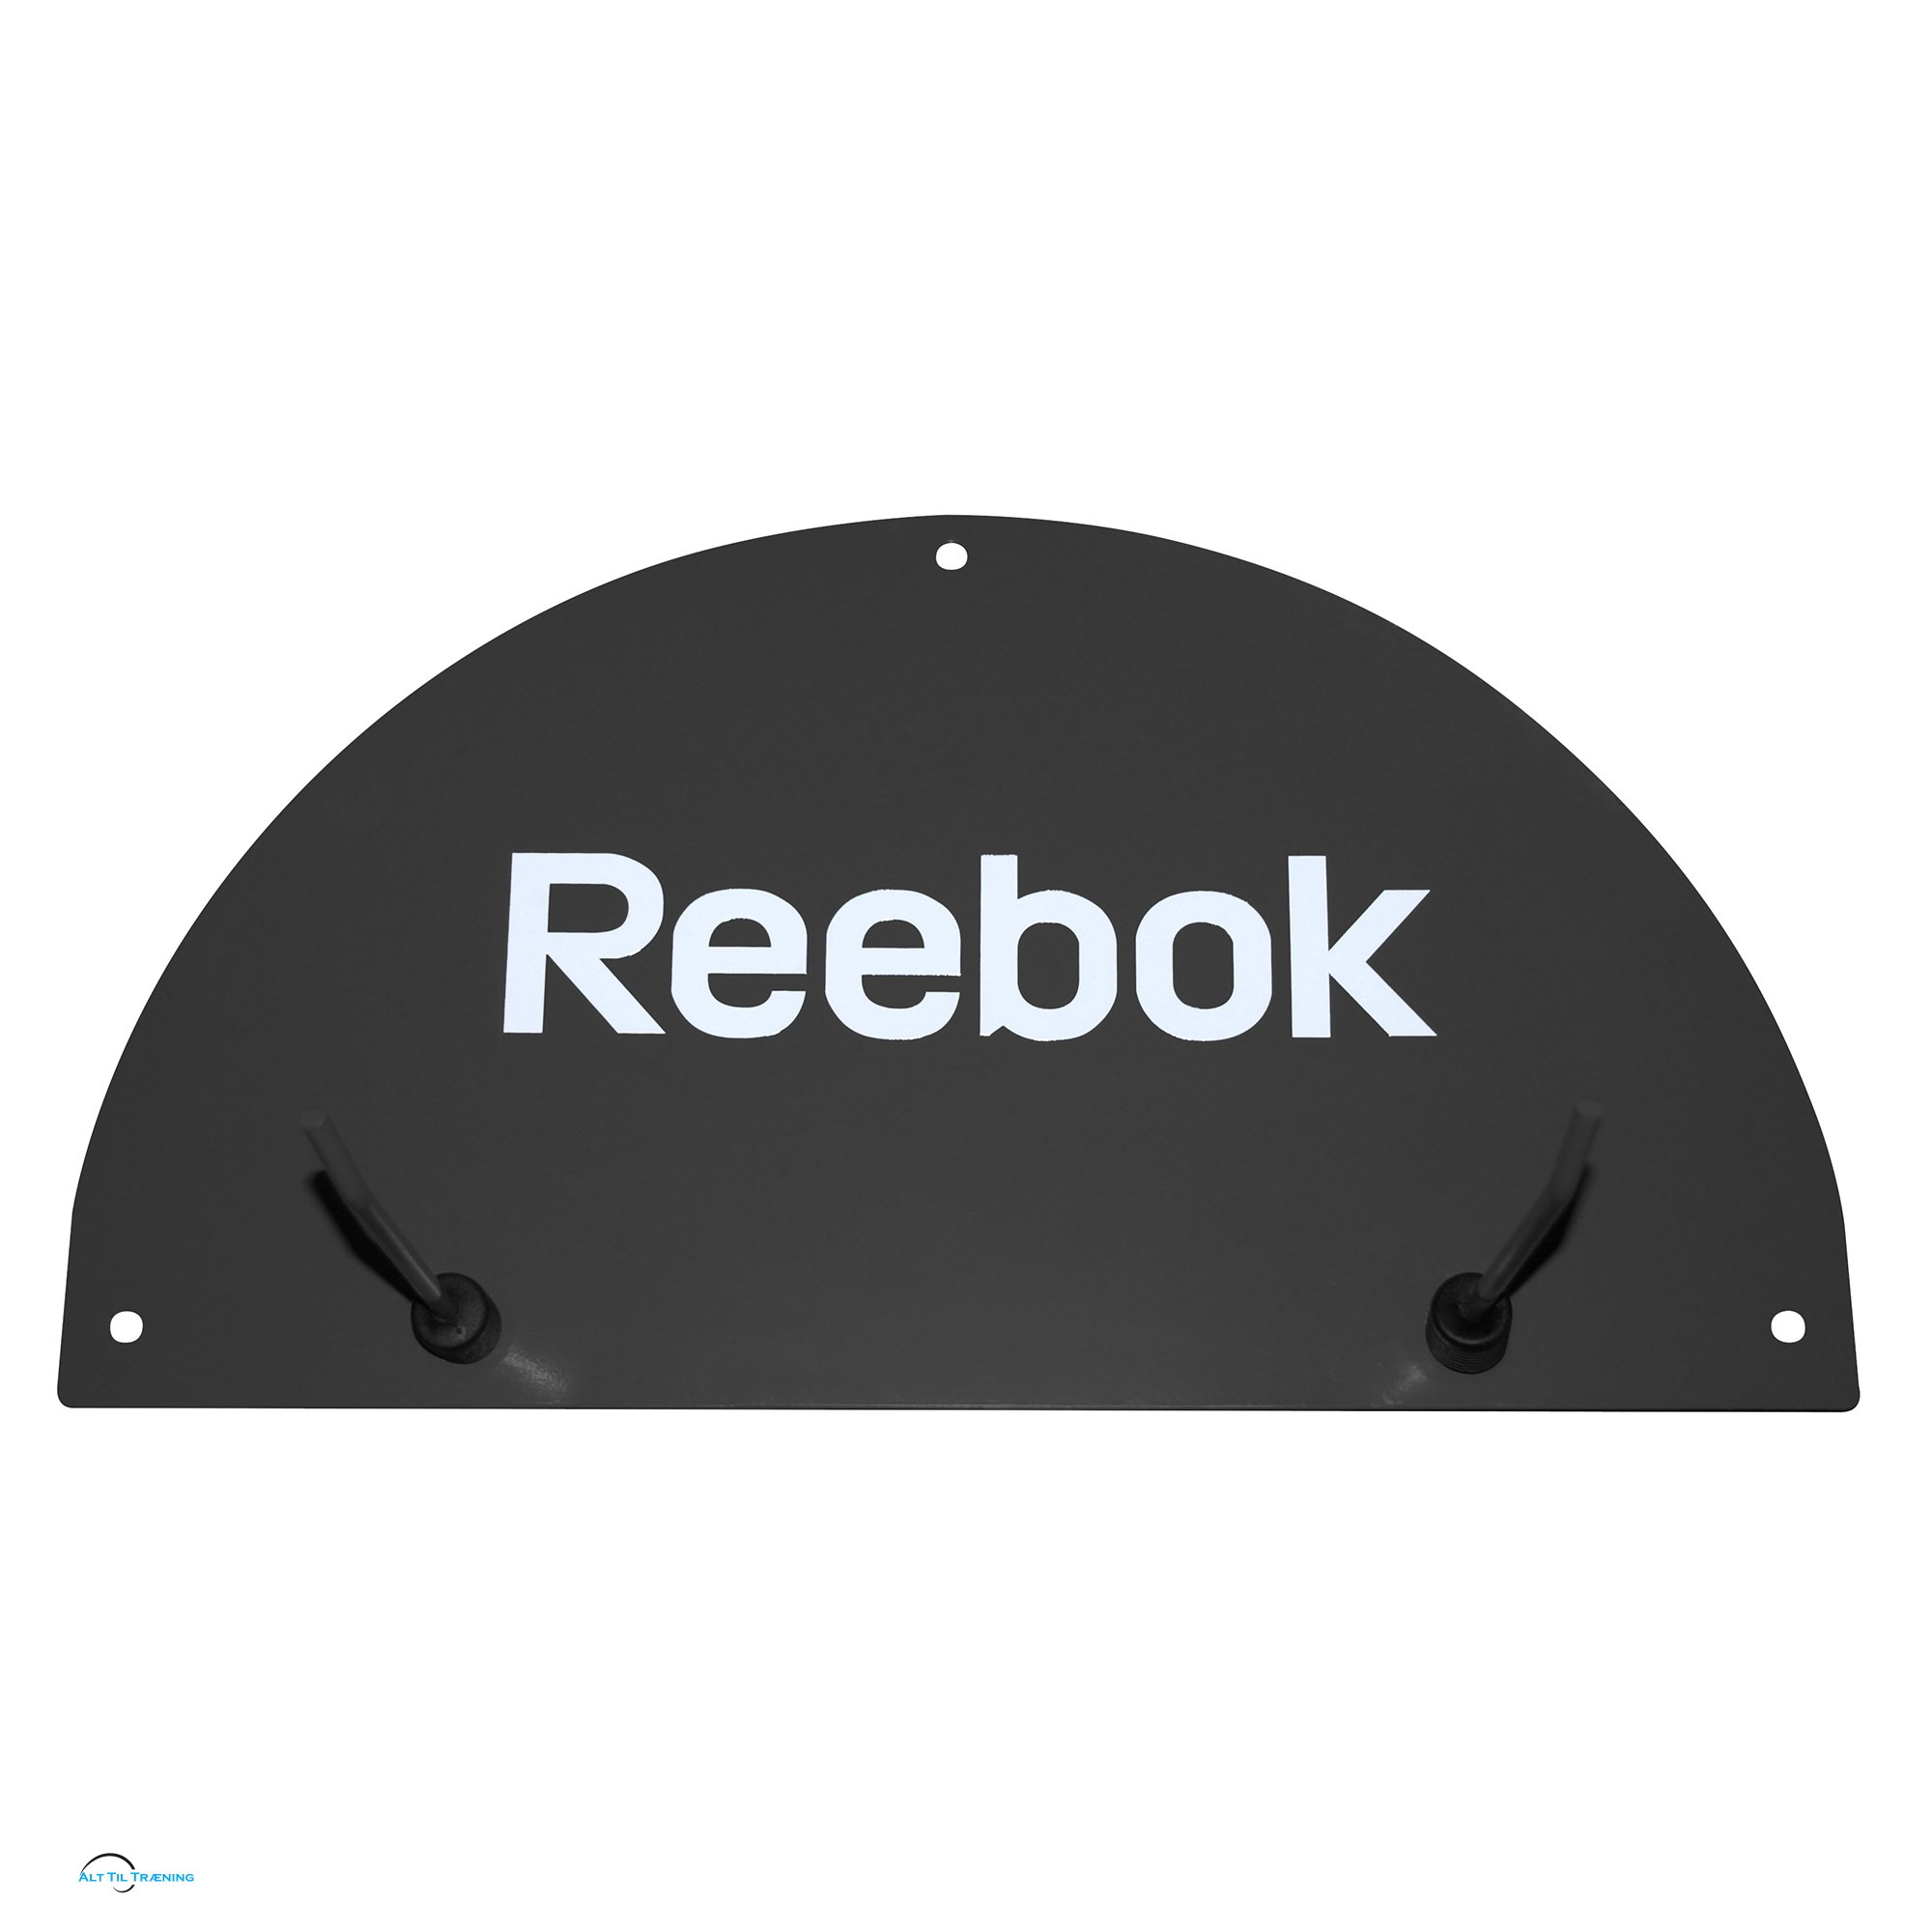 Reebok Rack Studio Wall Mat, Black